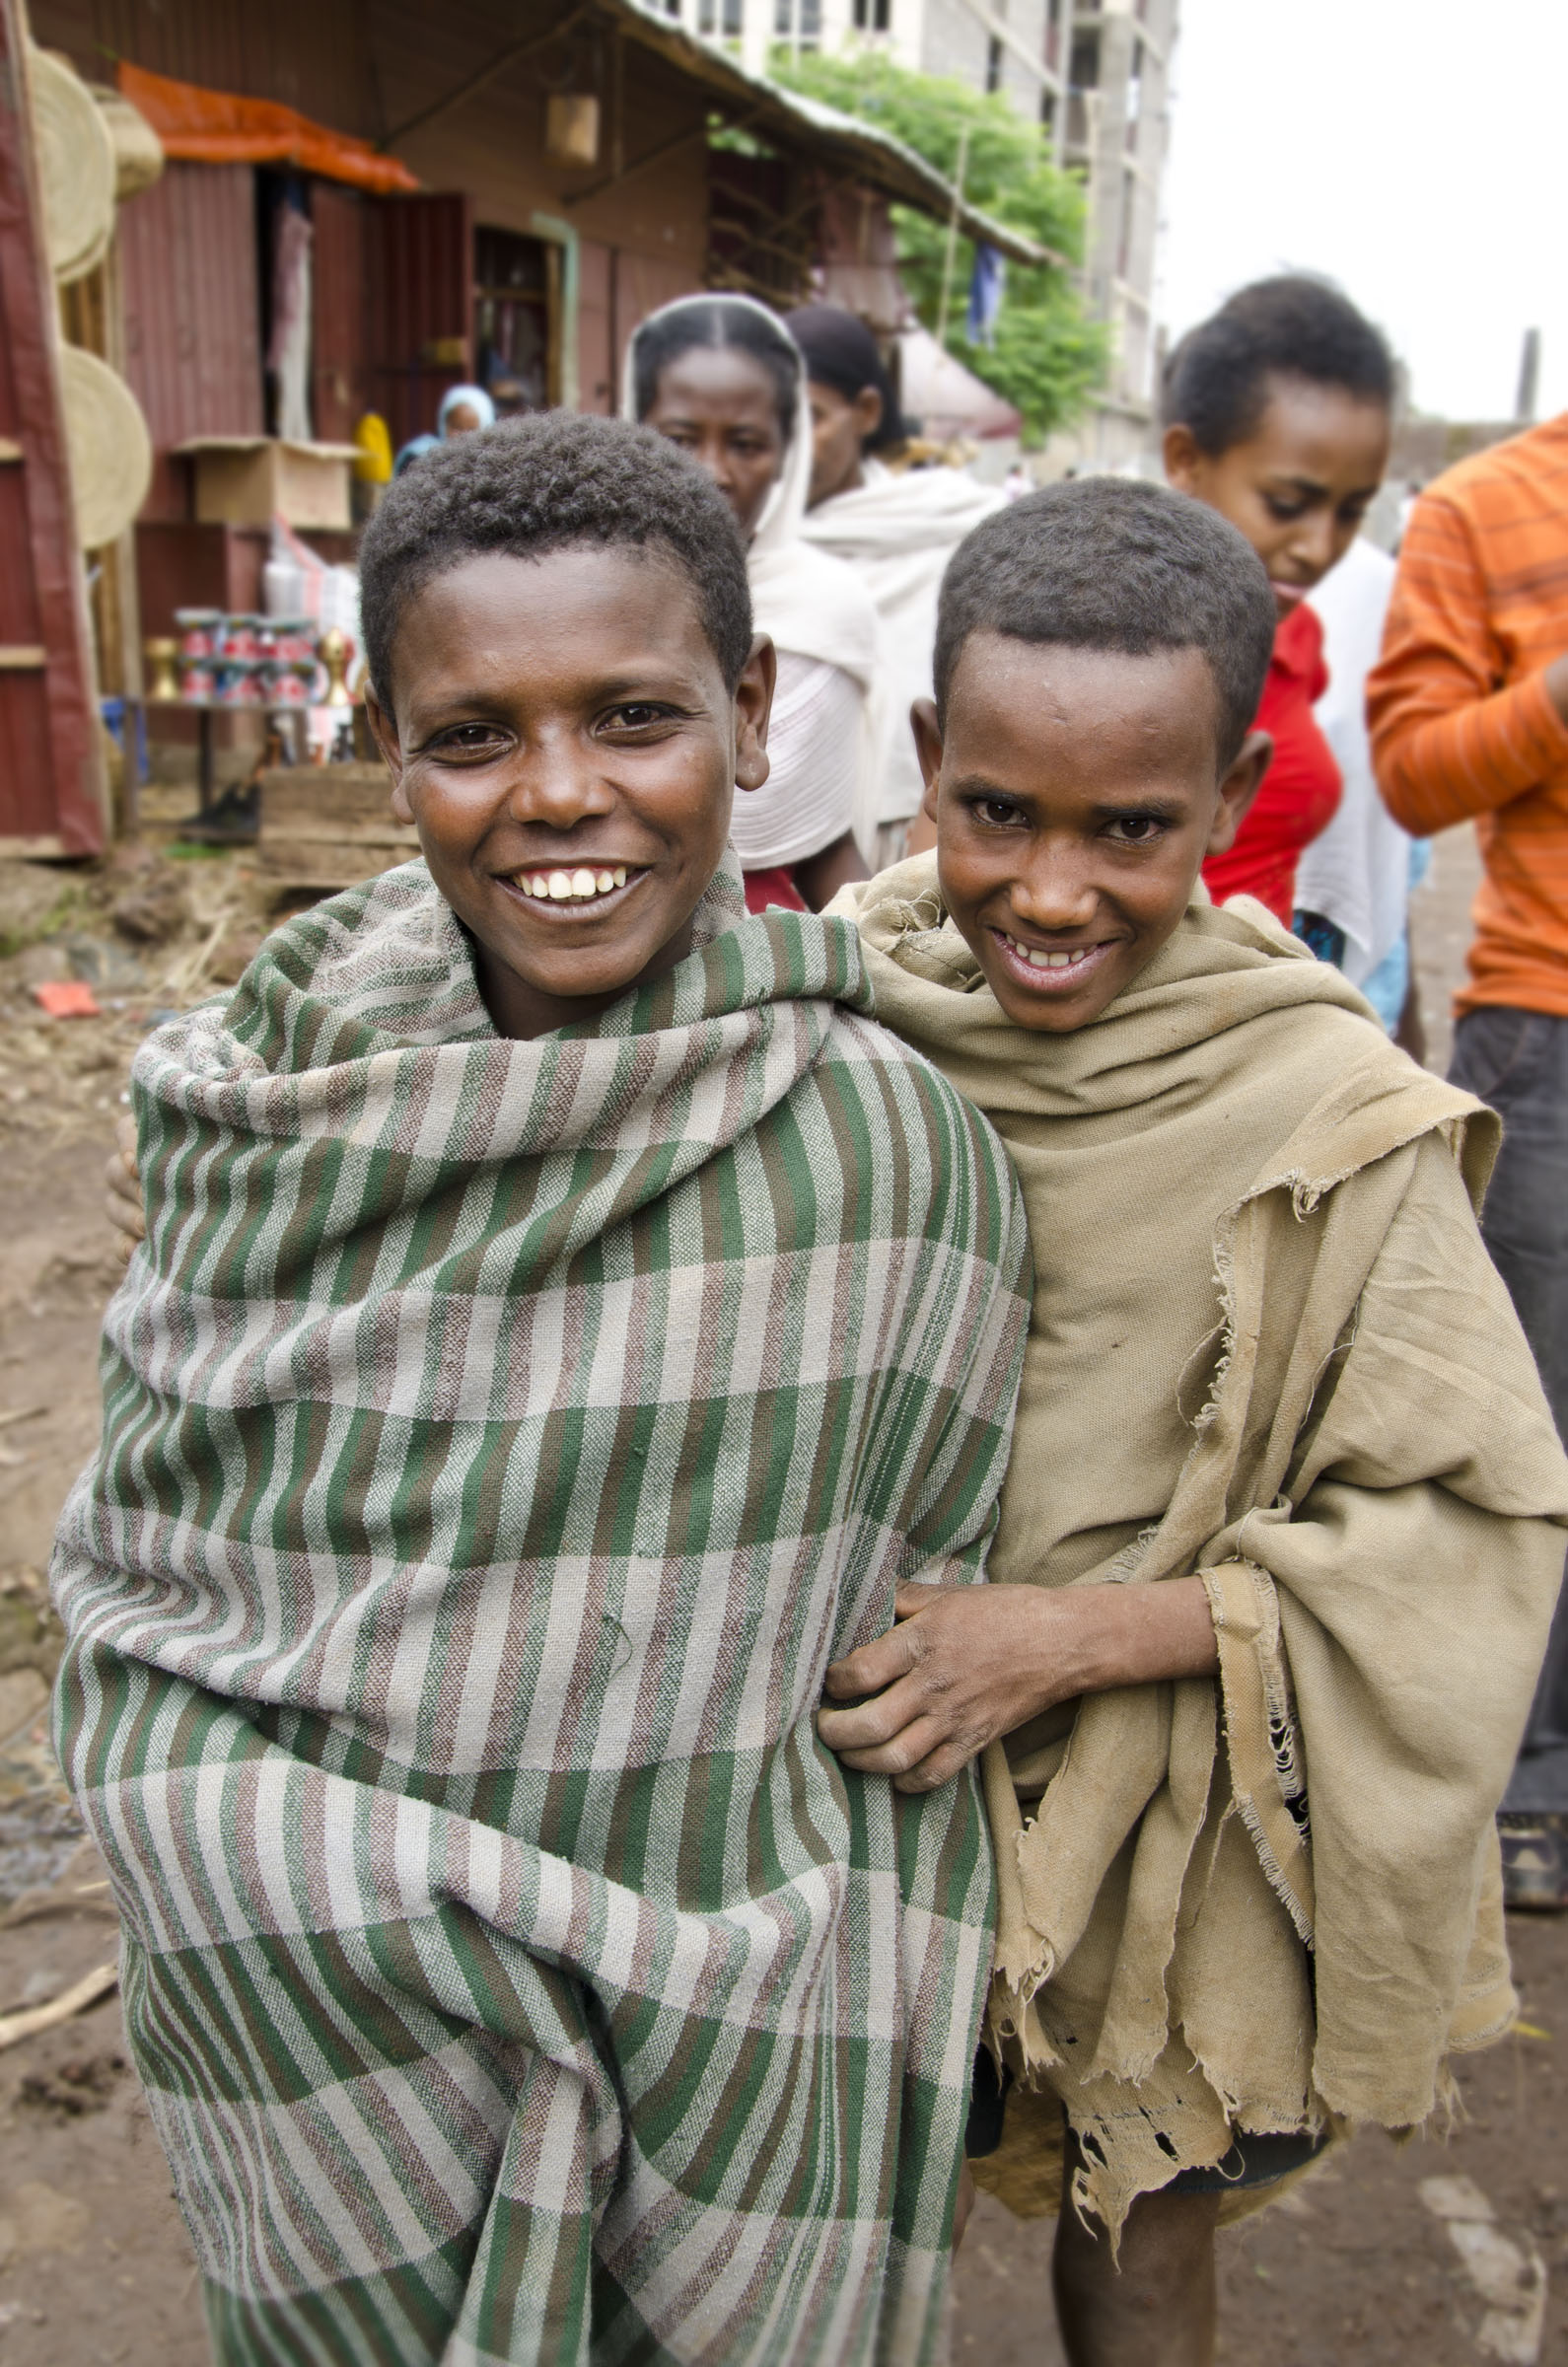 Teenage Ethiopian boys in traditional shawls